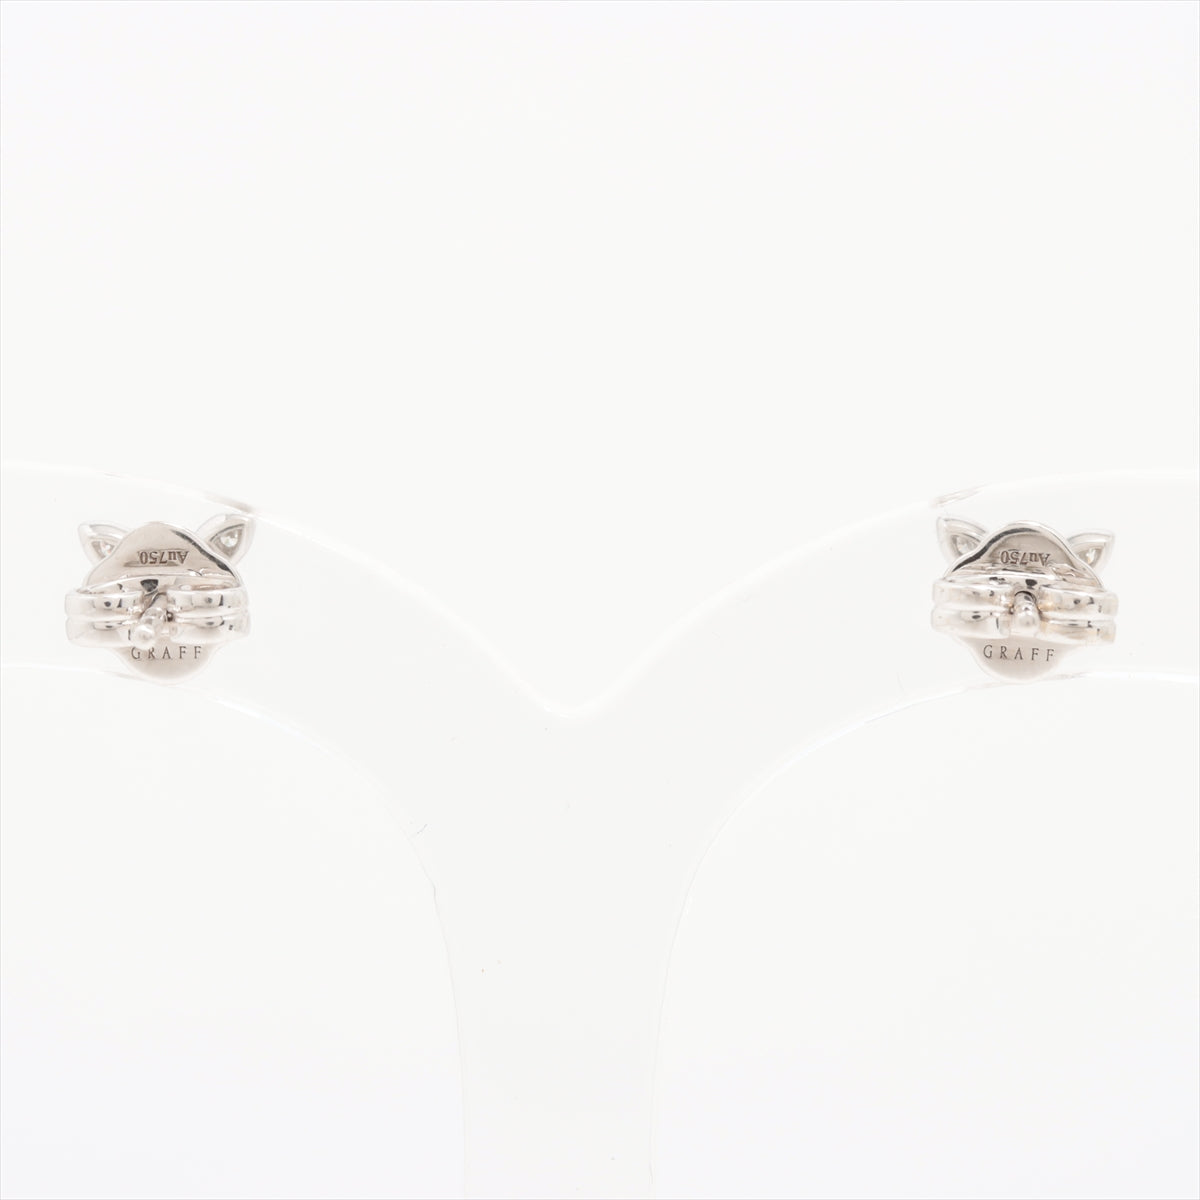 graphs Butterfly Pavé diamond Piercing jewelry 750(WG) 1.8g